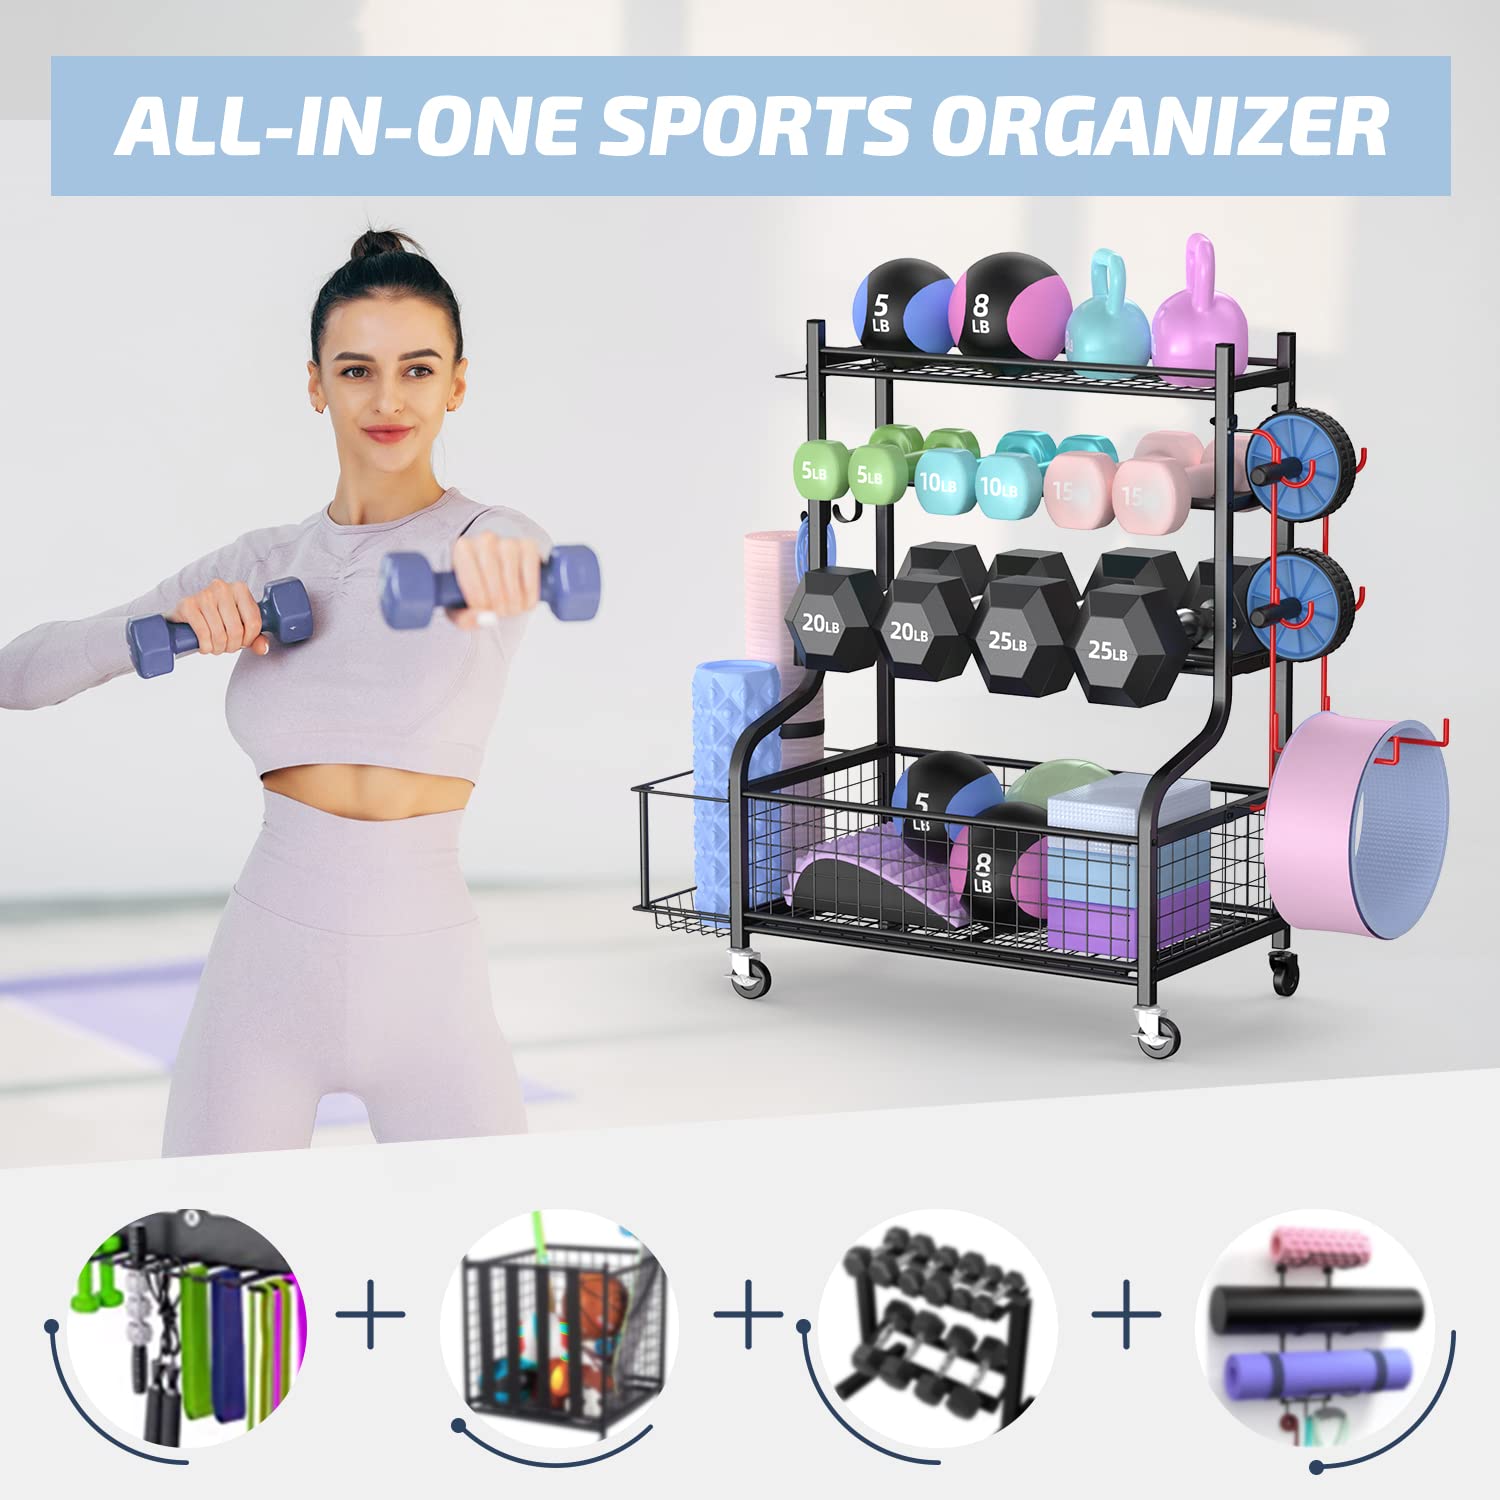 Mythinglogic Home Gym Equipment Storage Organizer Yoga Mat Holder